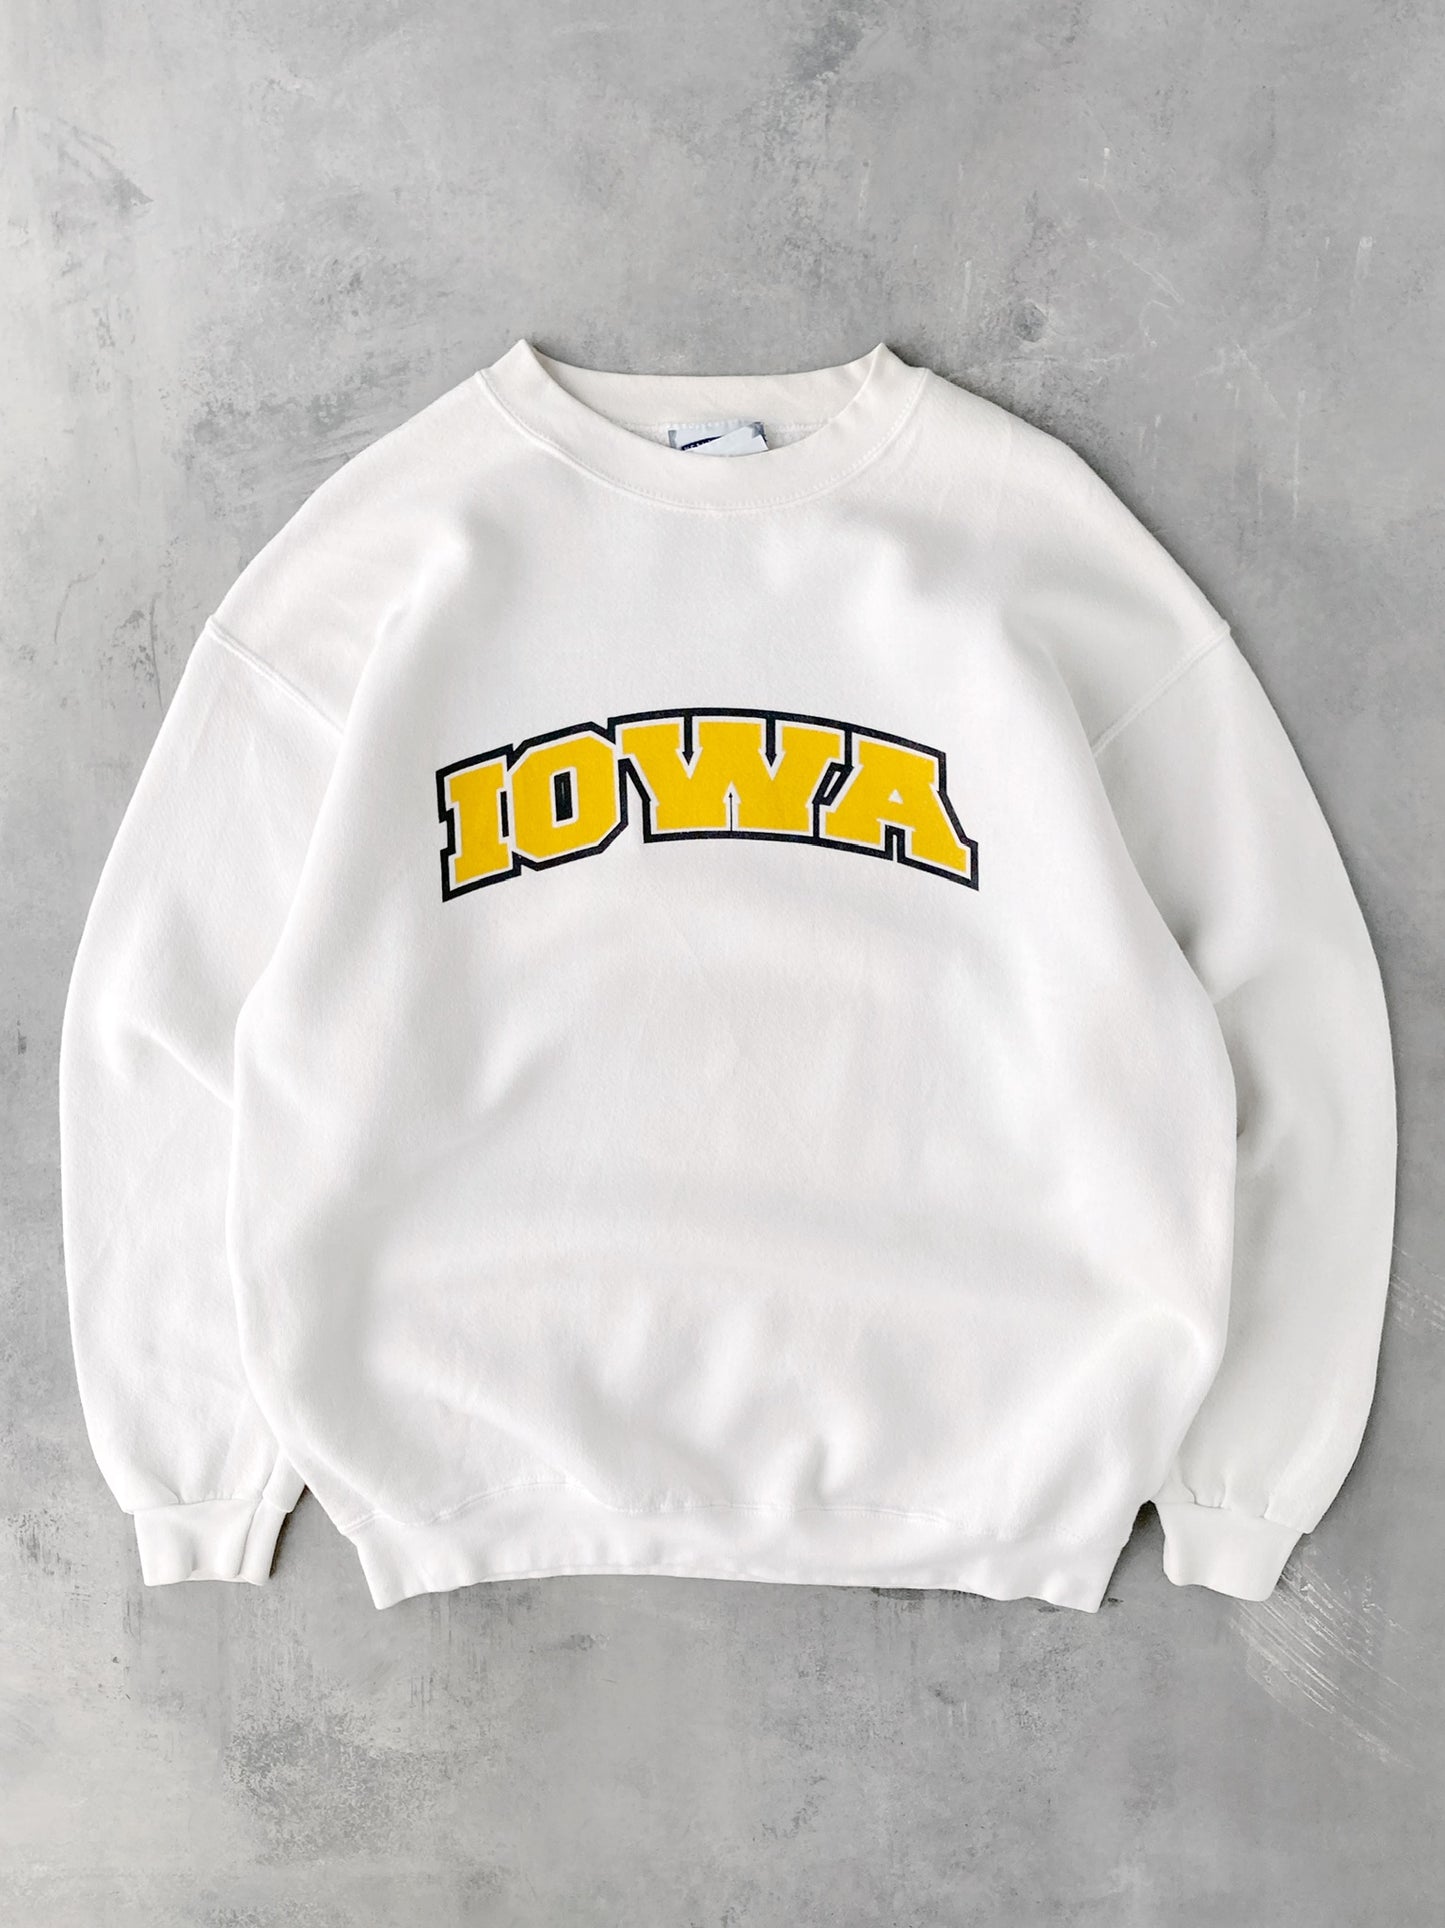 University of Iowa Sweatshirt 90's - Large